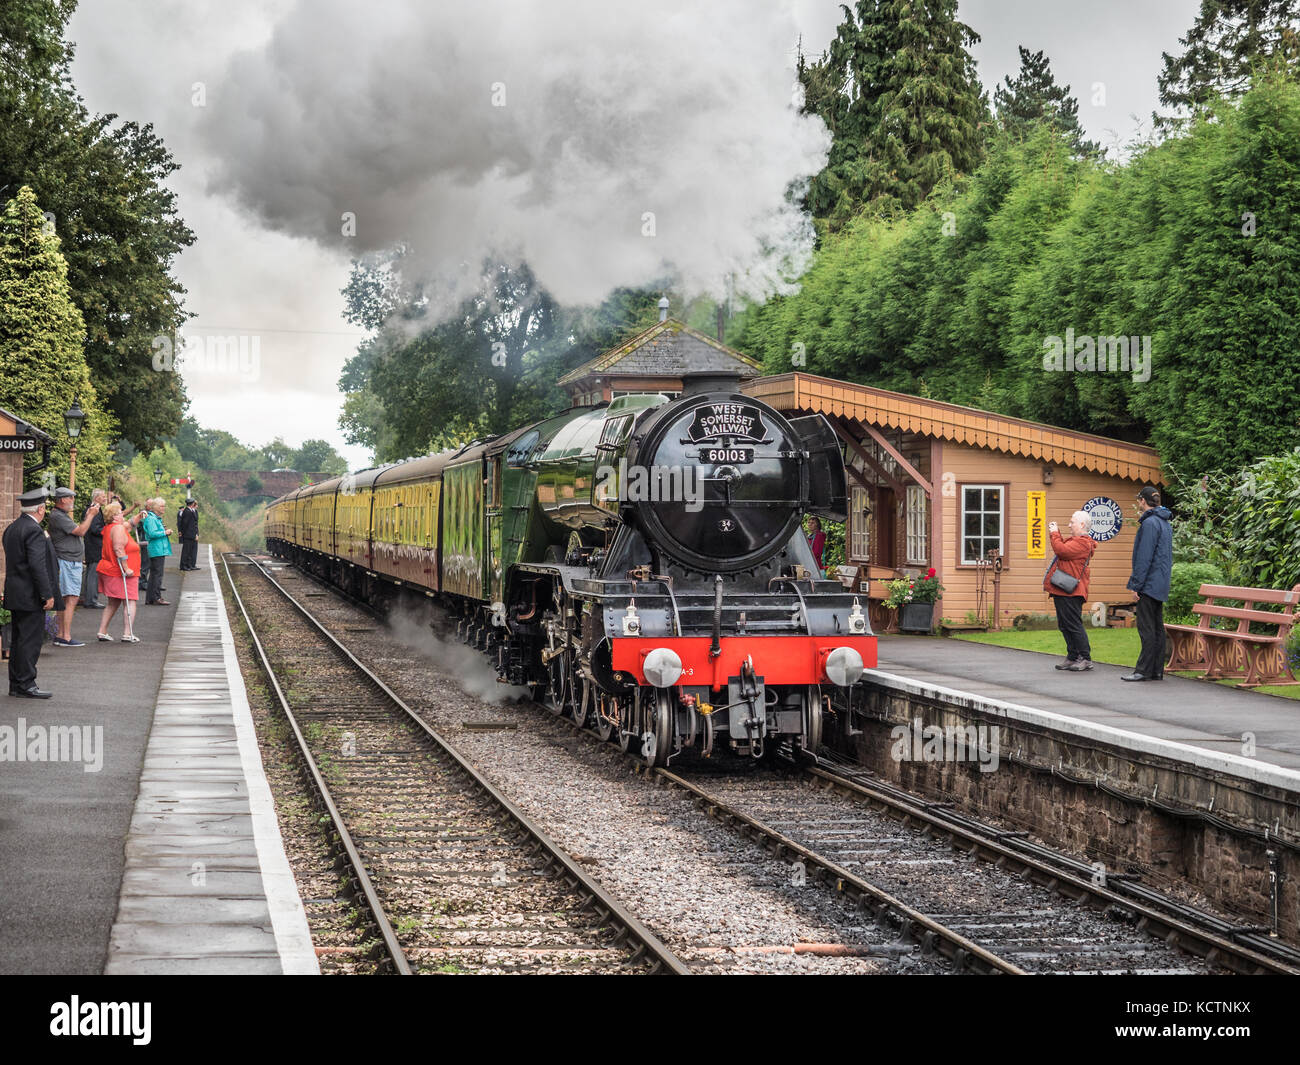 The Flying Scotsman 60103 steam locomotive at Crowcombe Heathfield railway station, Somerset, England, UK. Stock Photo